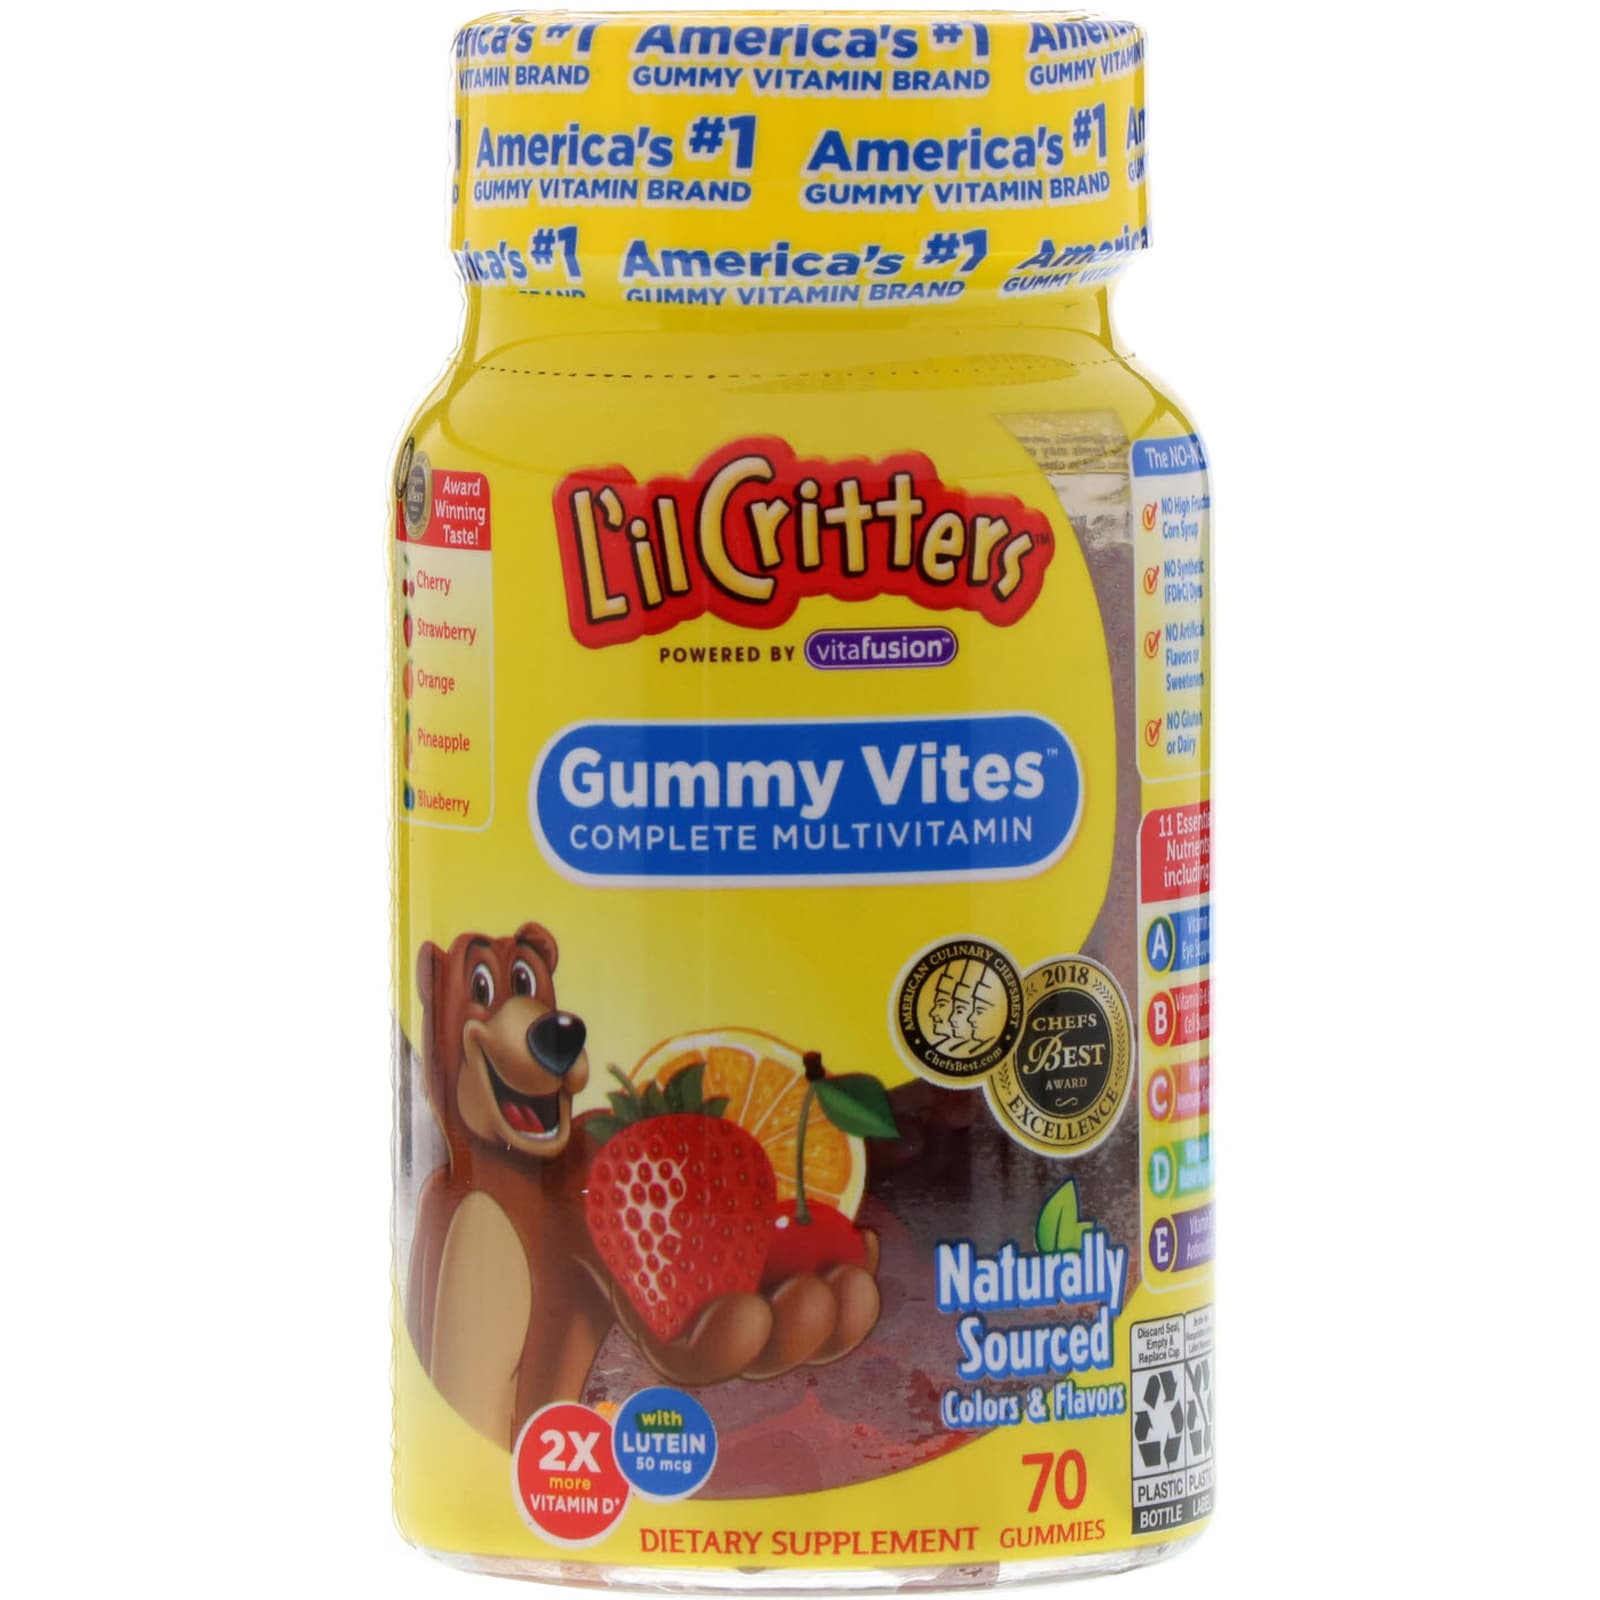 L'il Critters, Gummy Vitesコンプリートマルチビタミン、70グミ